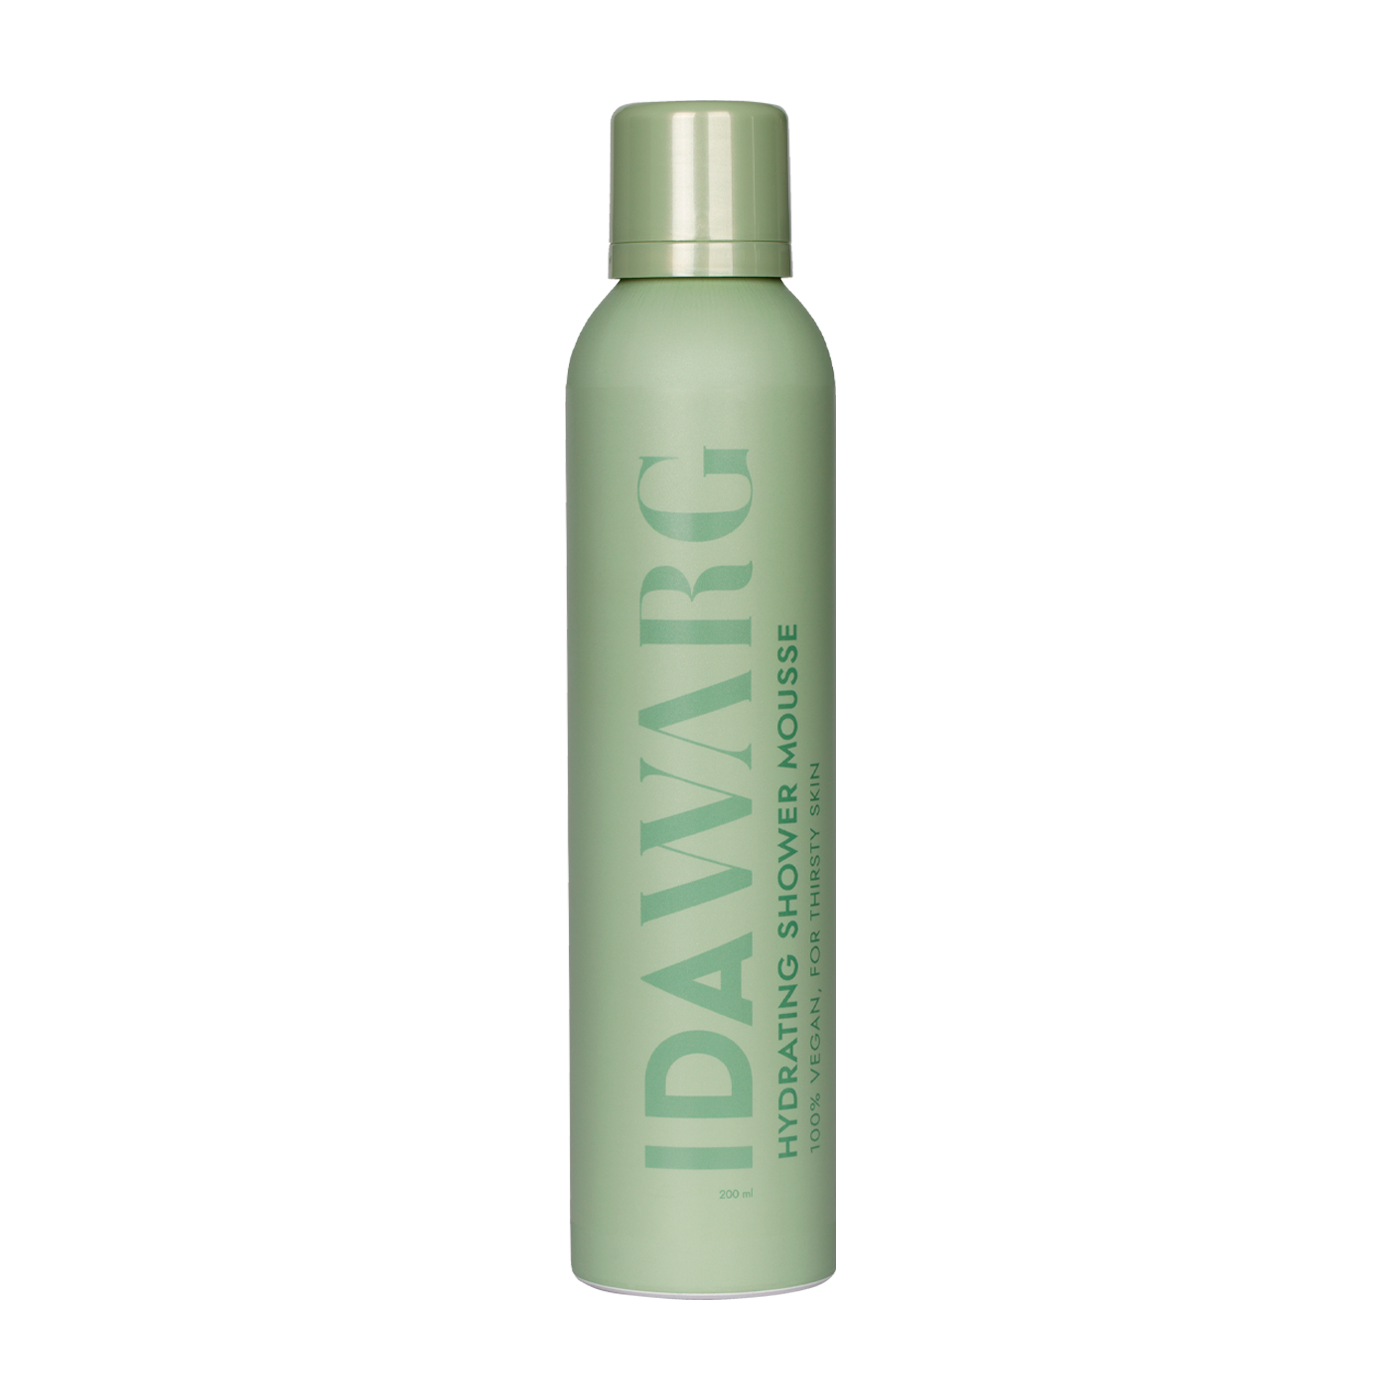 Ida Warg Beauty Hydrating Shower Mousse 200 ml